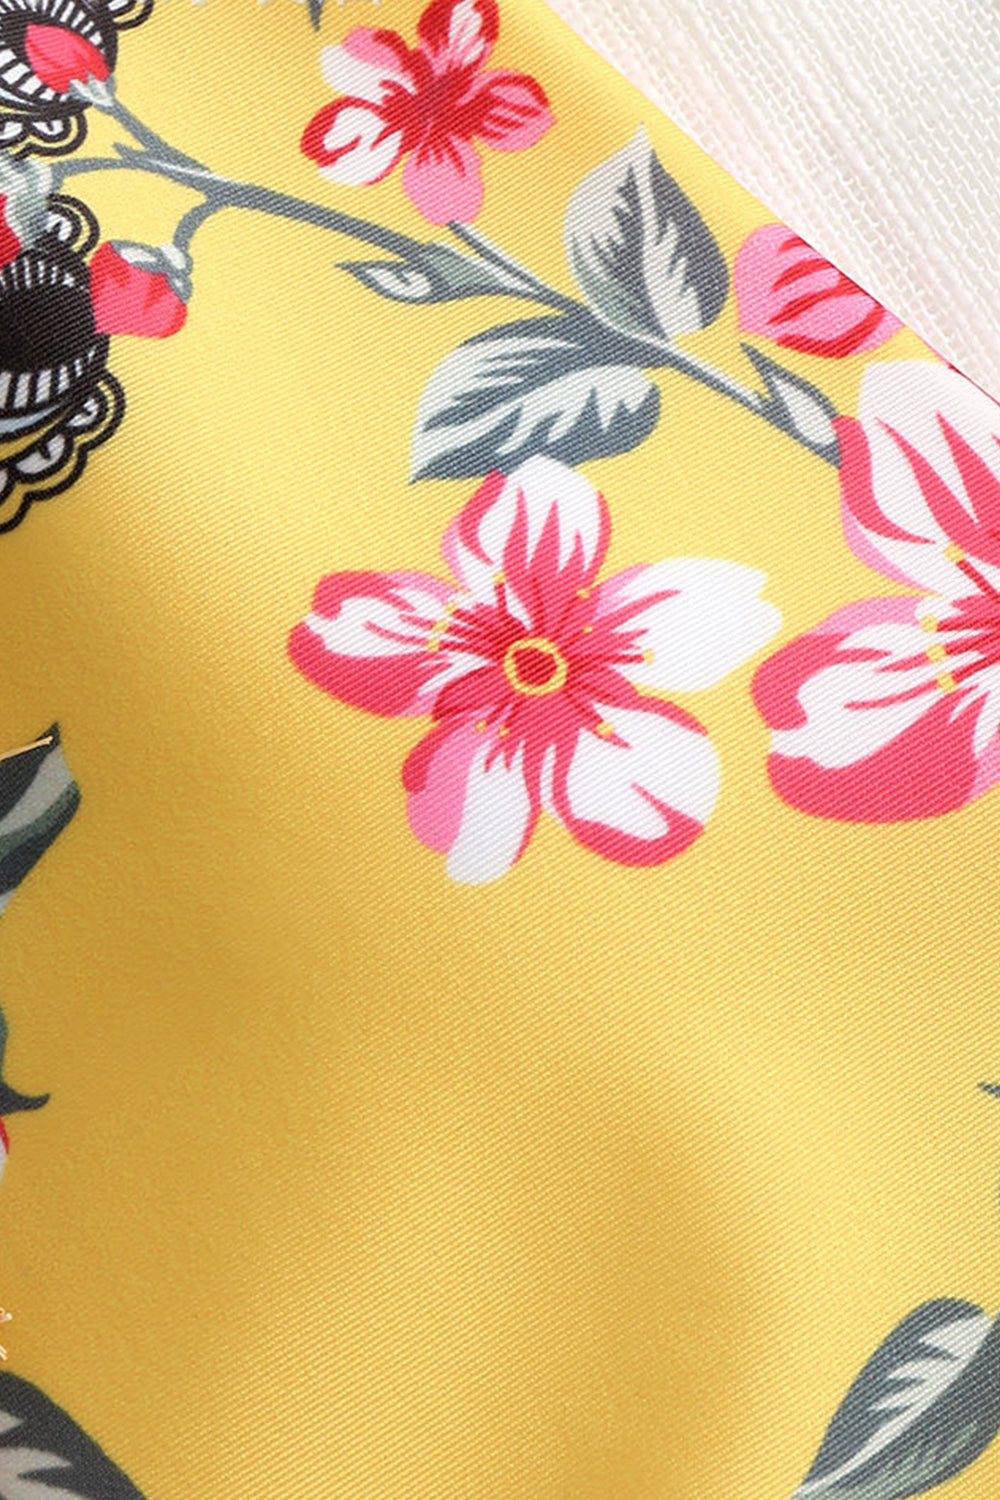 Iyasson Sexy Yellow Floral Printing Swimwear